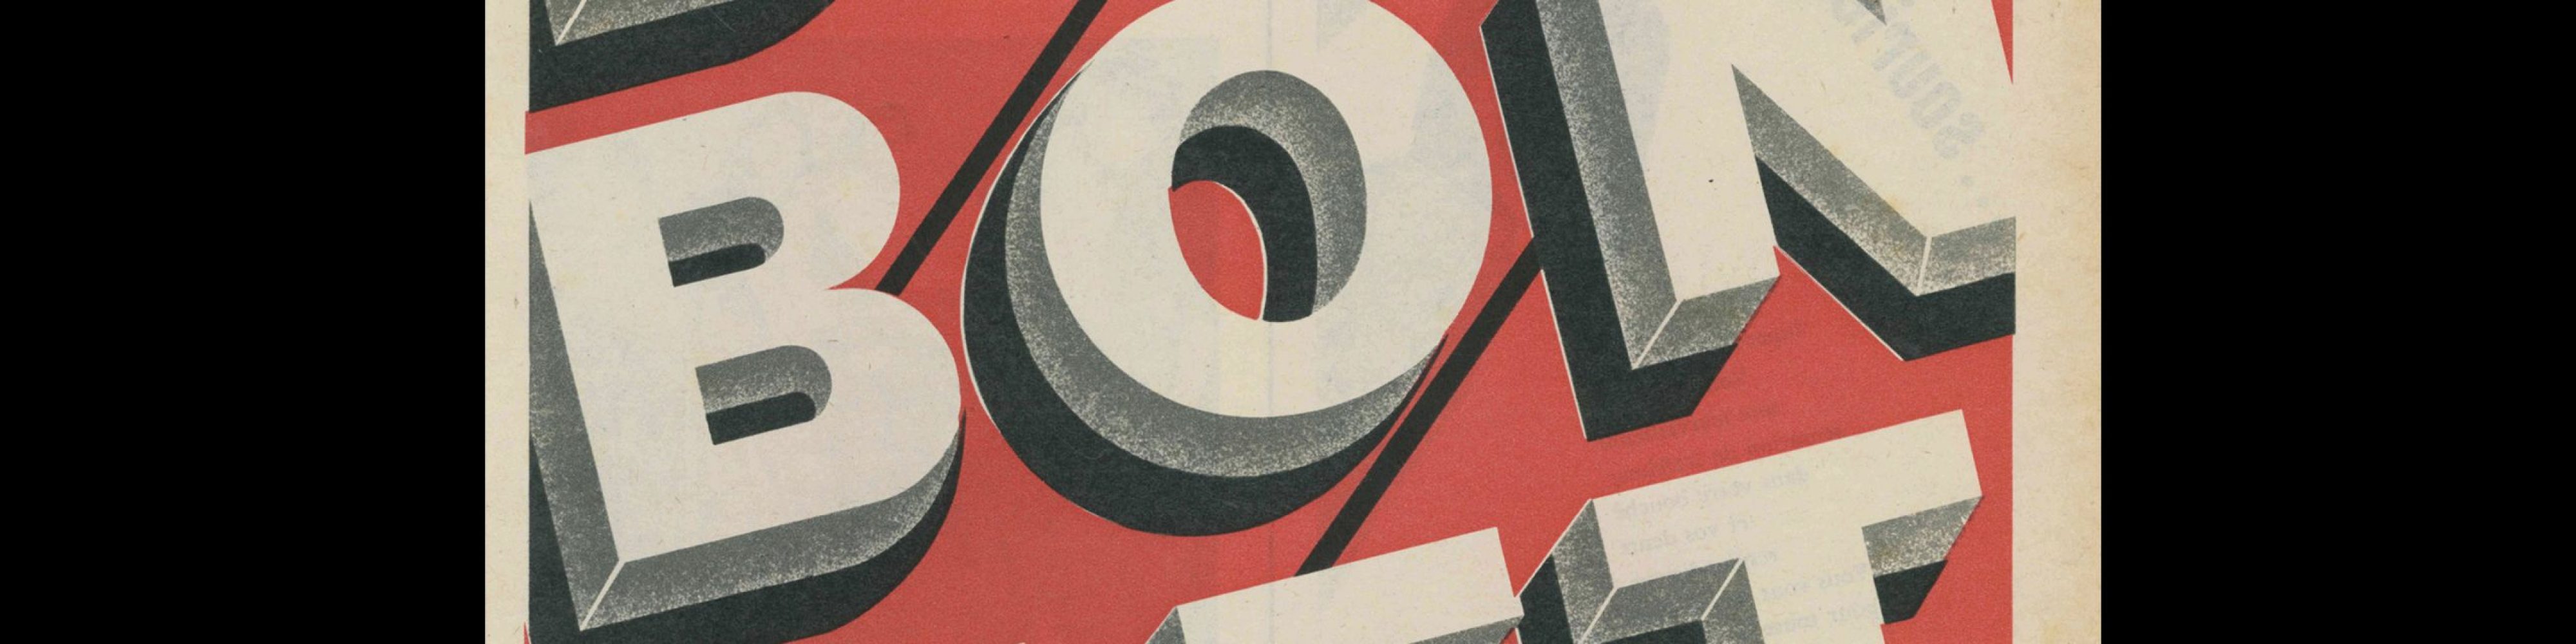 Dubonnet, Press Advertisement, 1956. Designed by Virtel